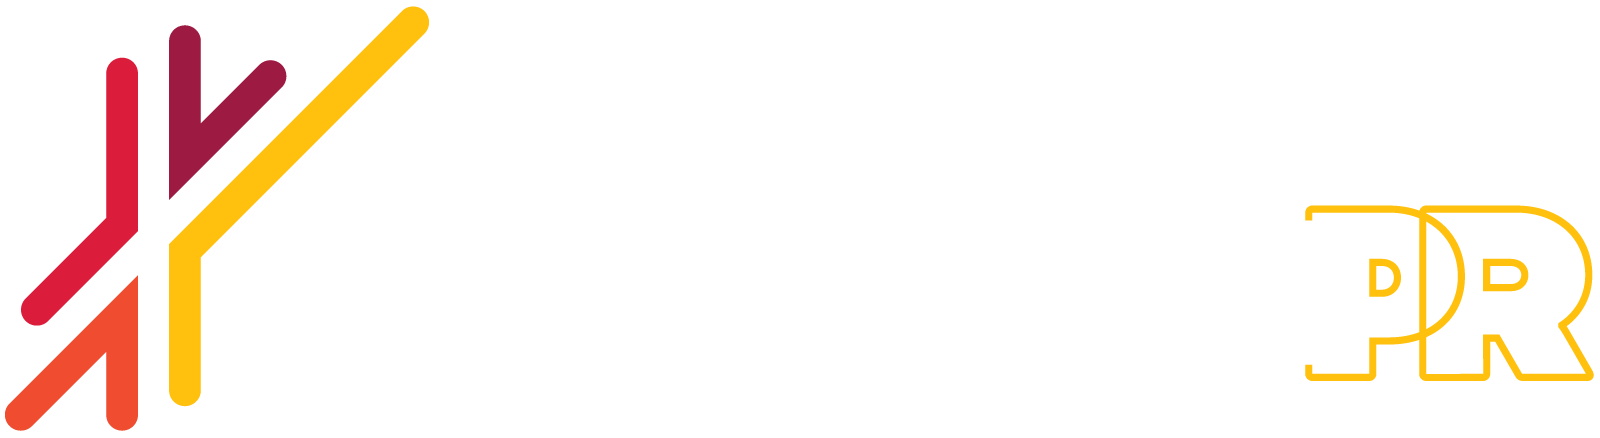 StretchPR-logo-FINAL